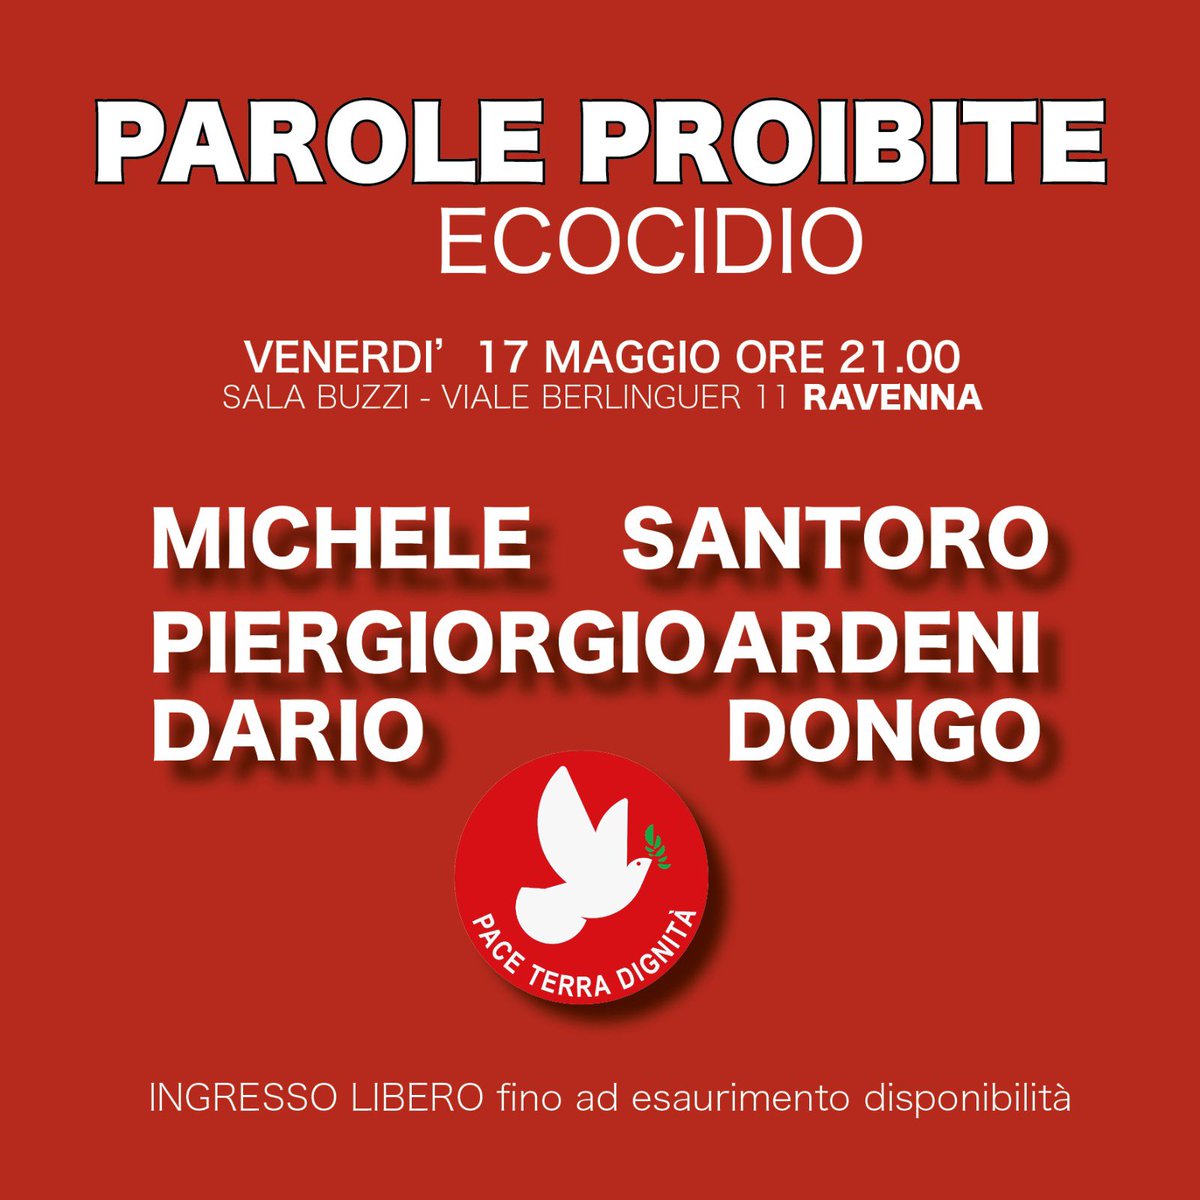 17 maggio ➡️ Treviso, Modena, Ravenna 🕊️

#paceterradignità #votalapacedisertalaguerra